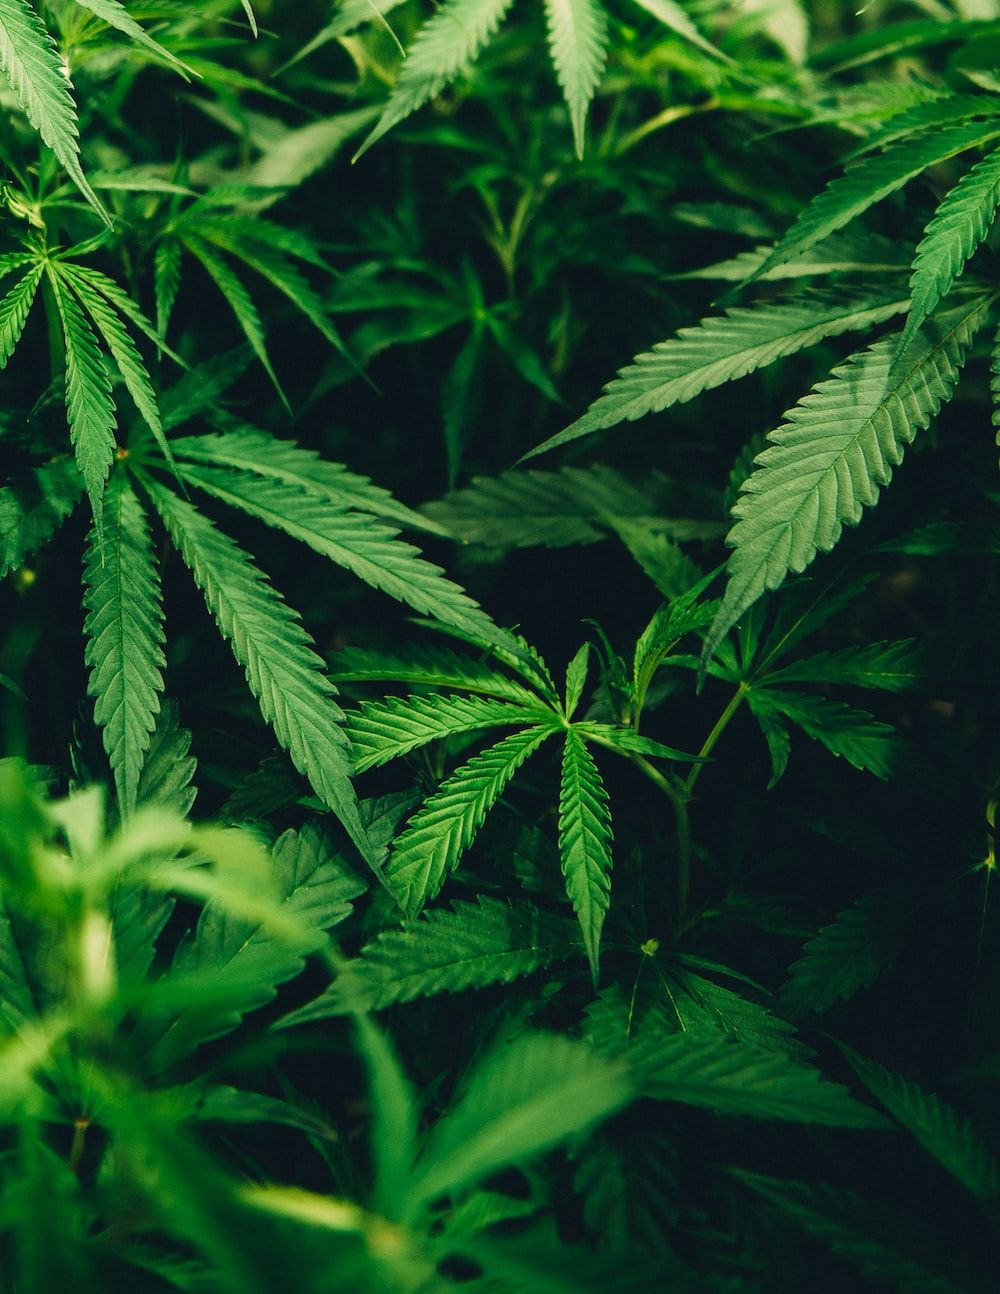 A close up of marijuana leaves - Weed